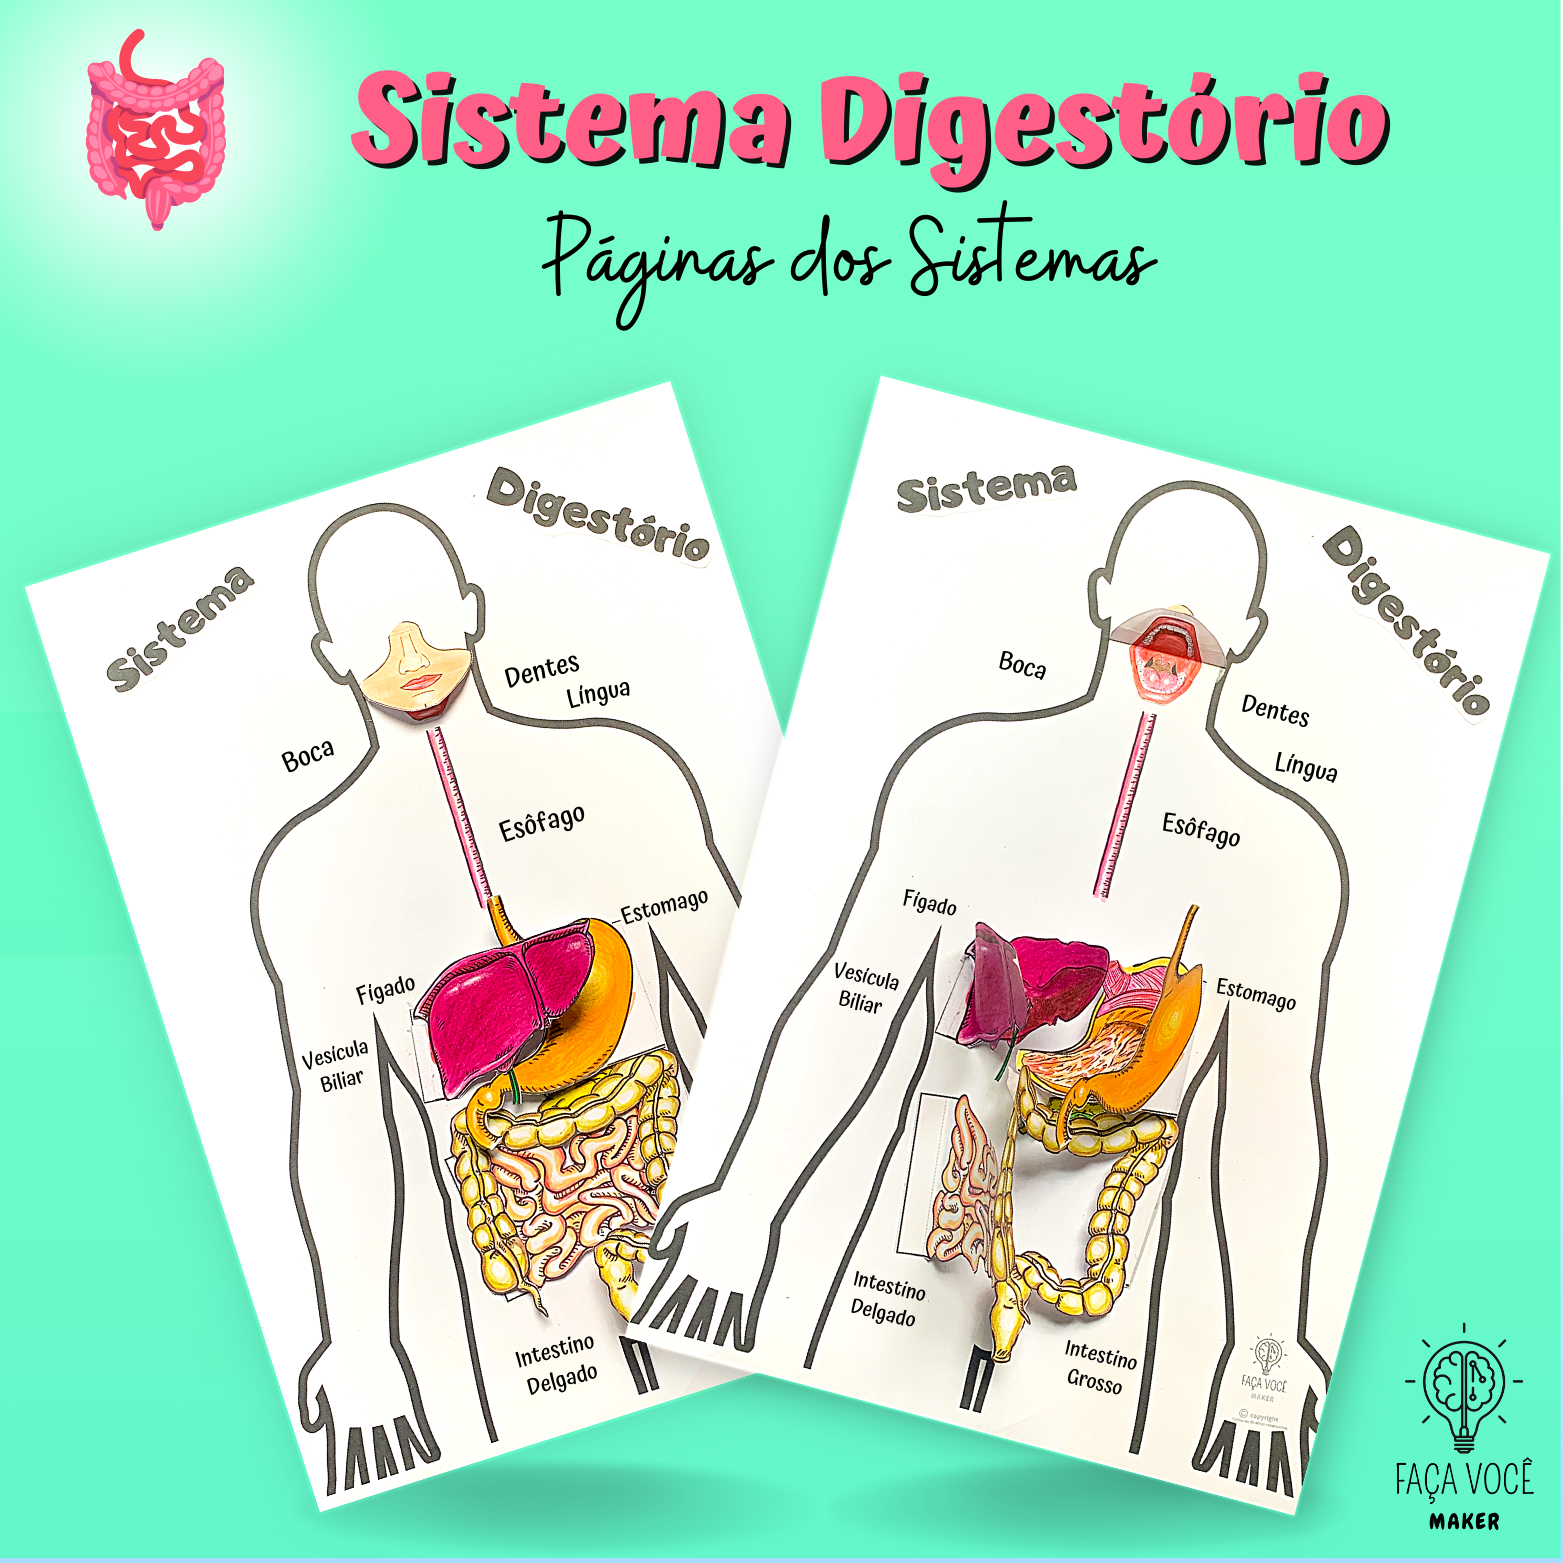 Página dos Sistemas Digestório